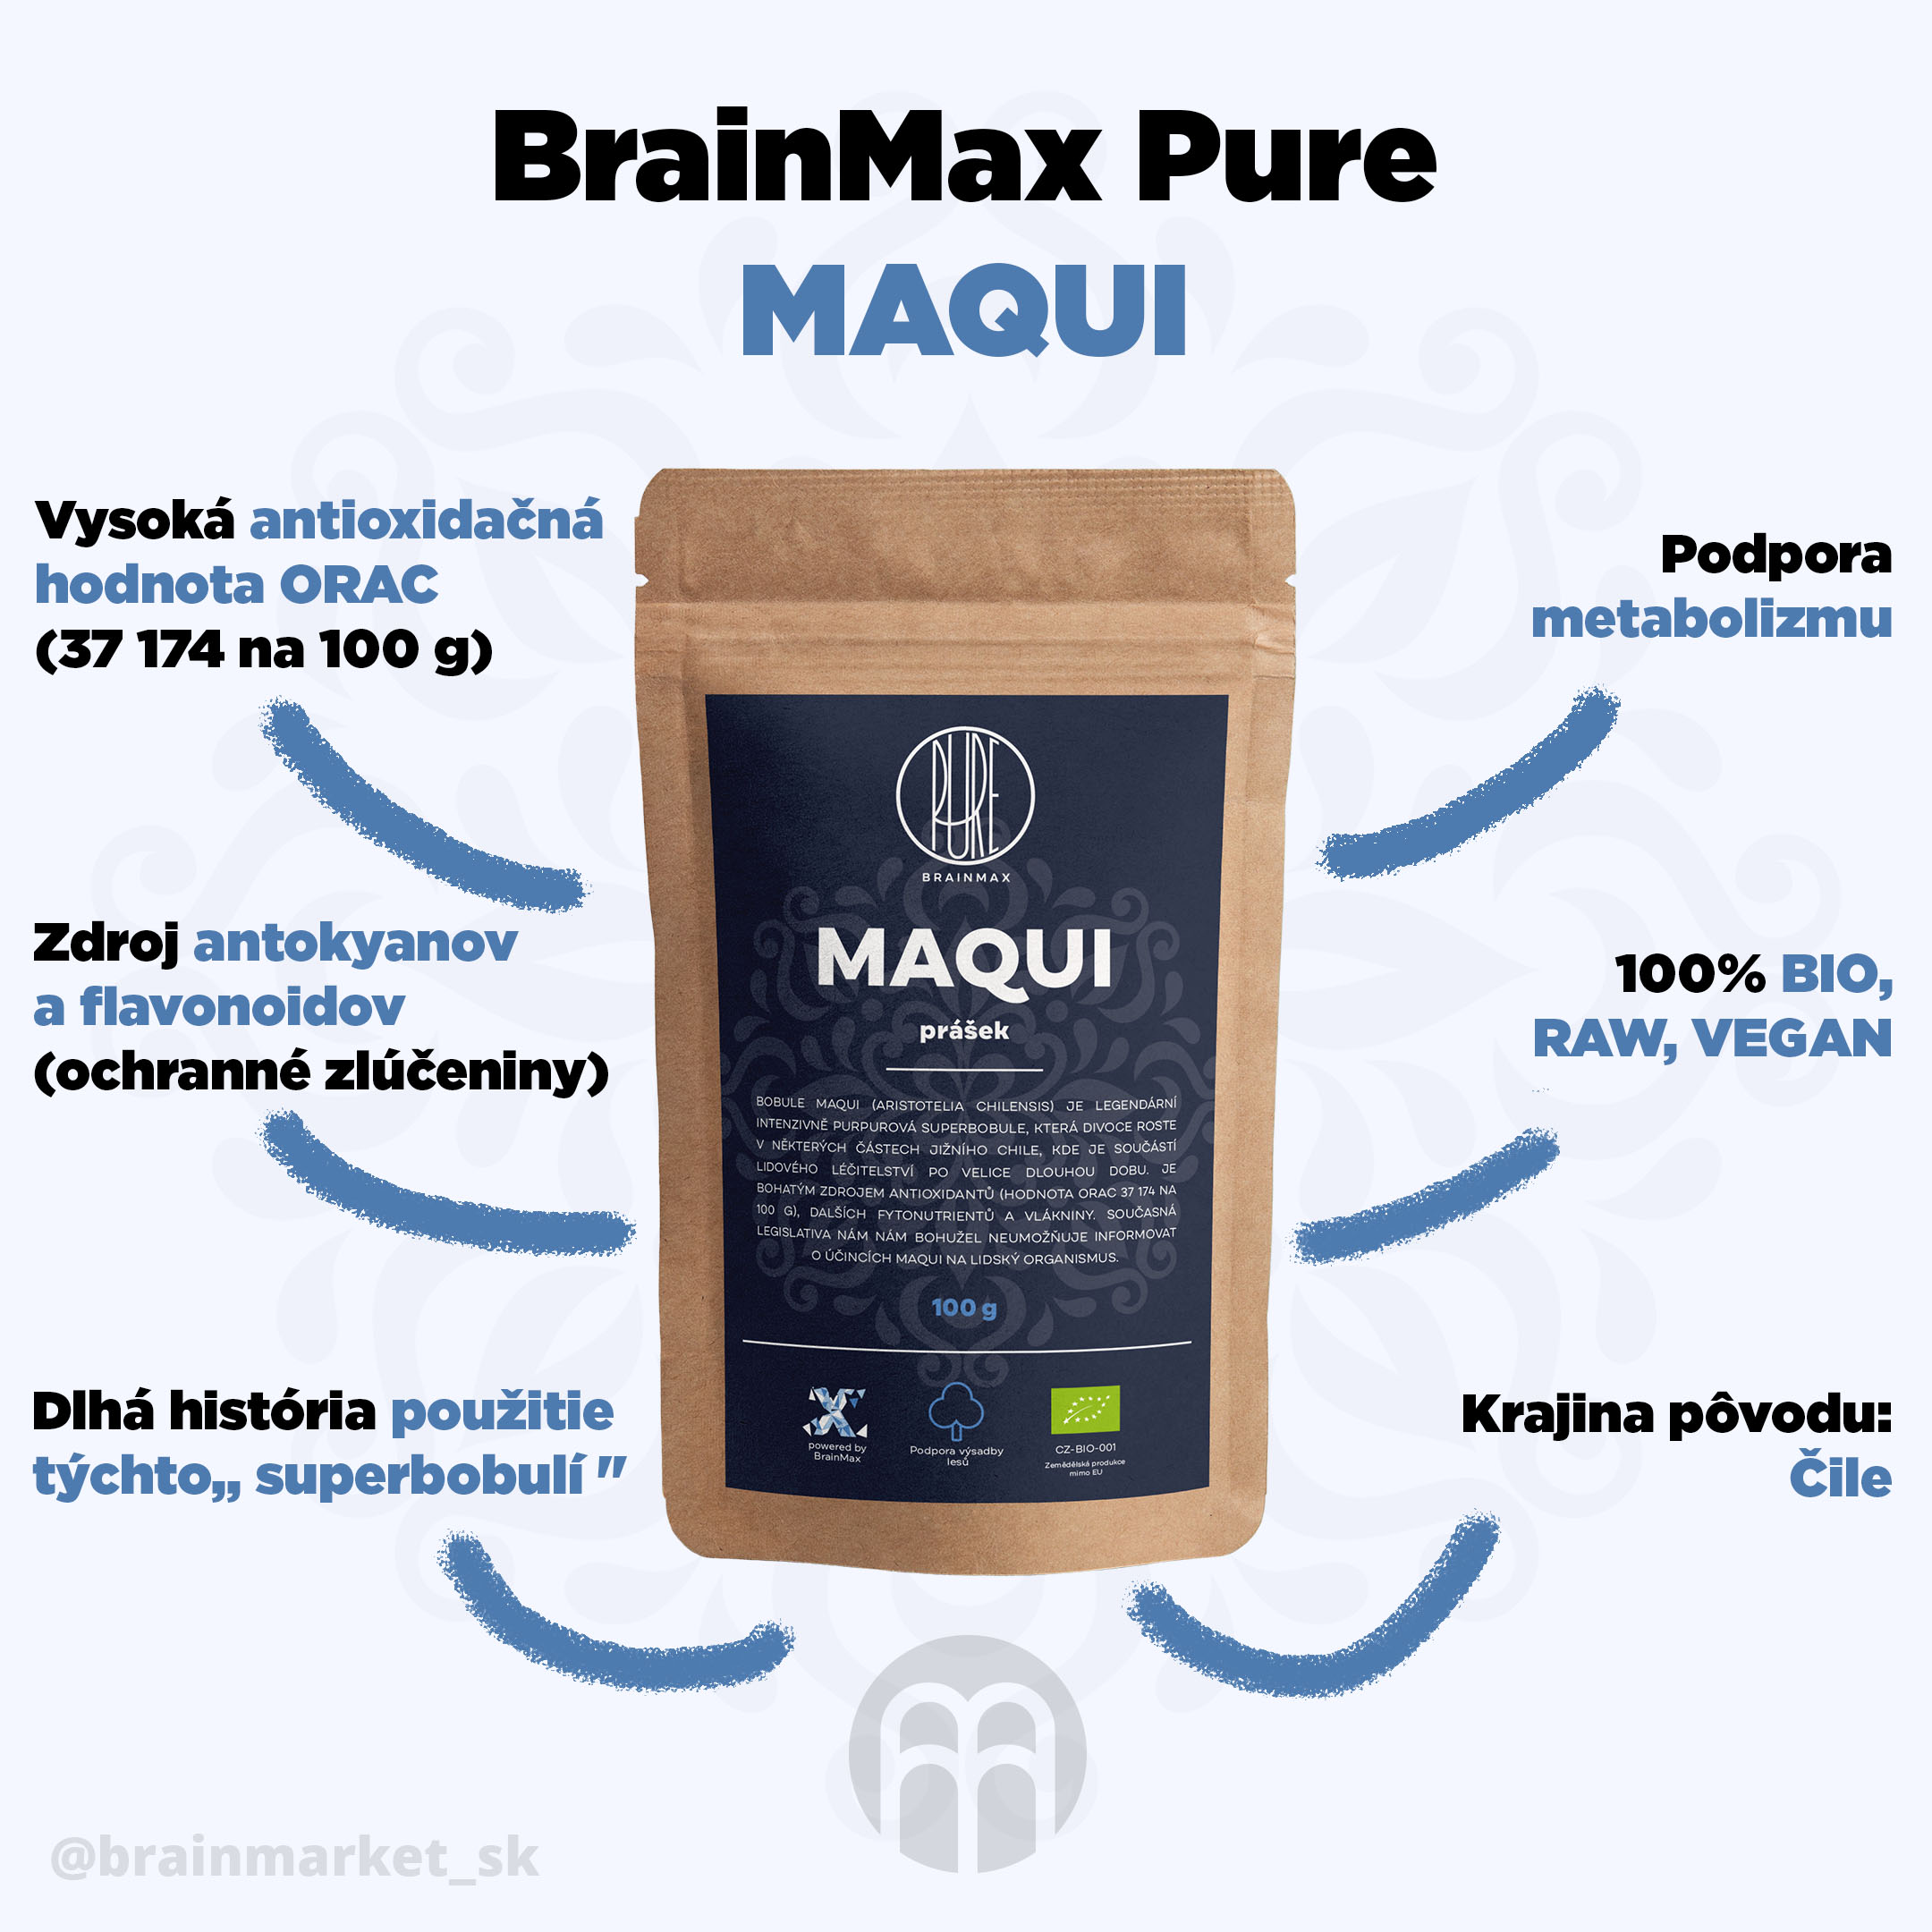 maqui_infografika_brainmarket_sk_1